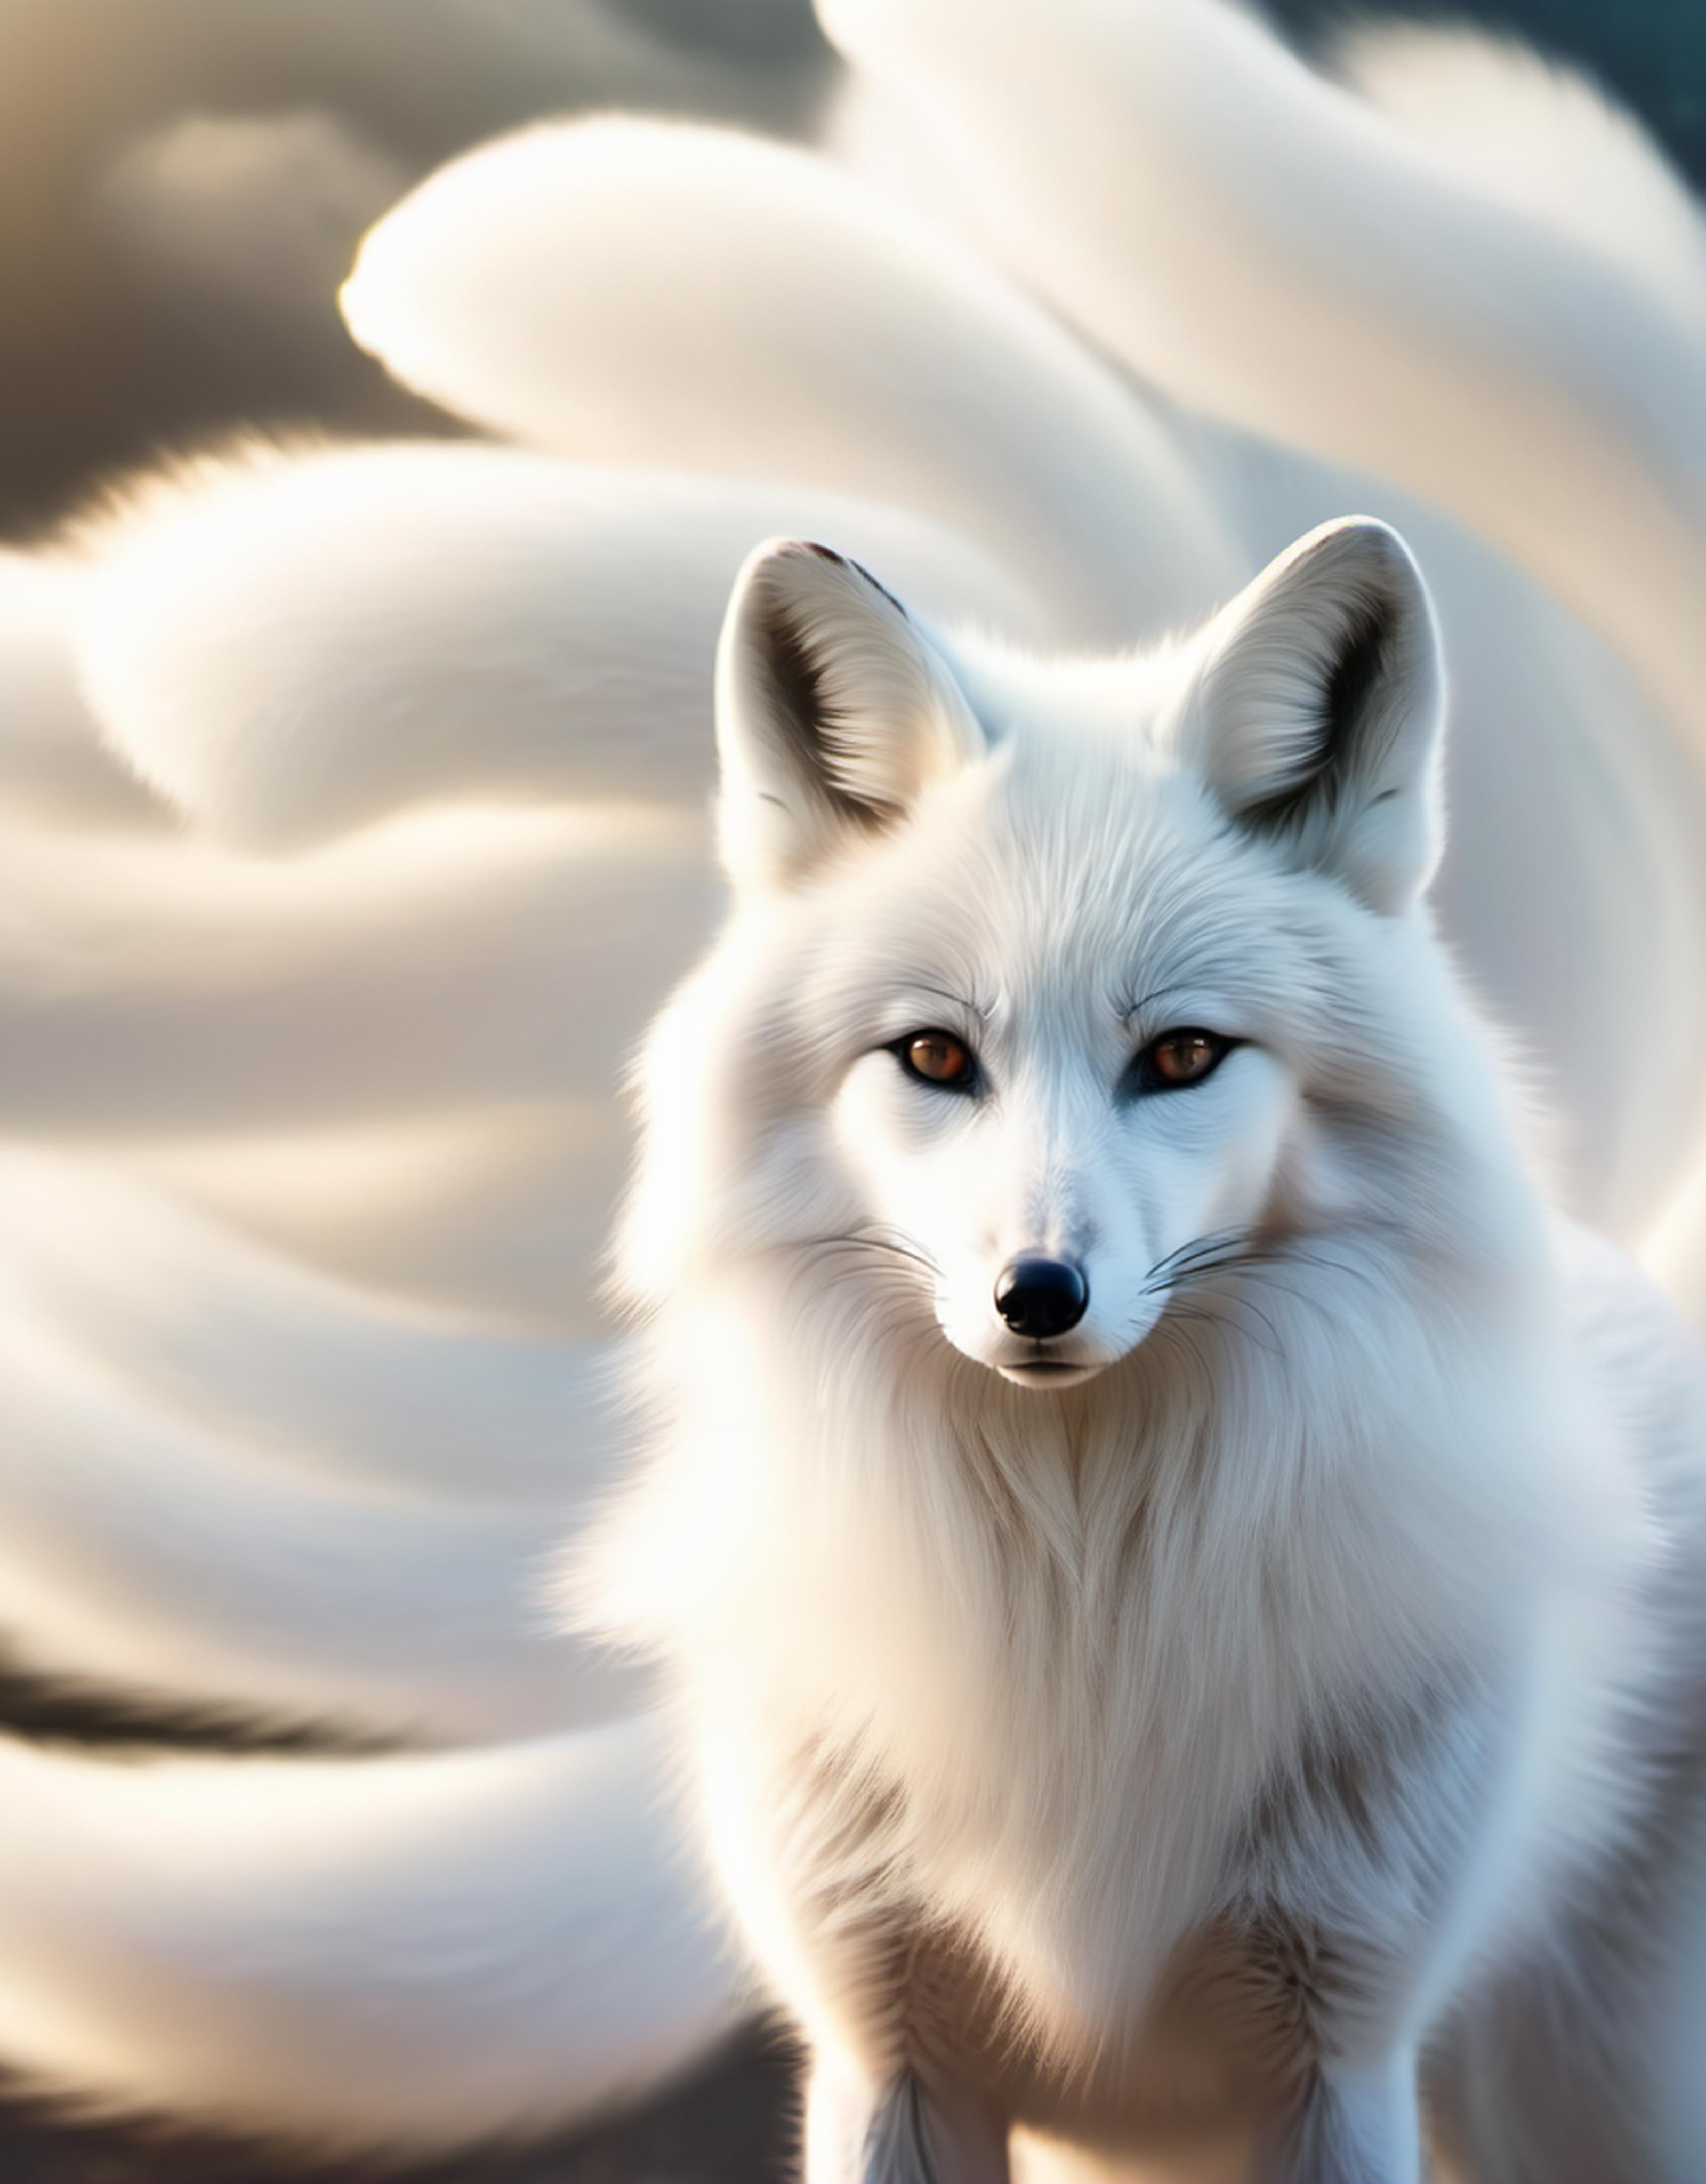 Fox Spirit image by Mr_fries1111